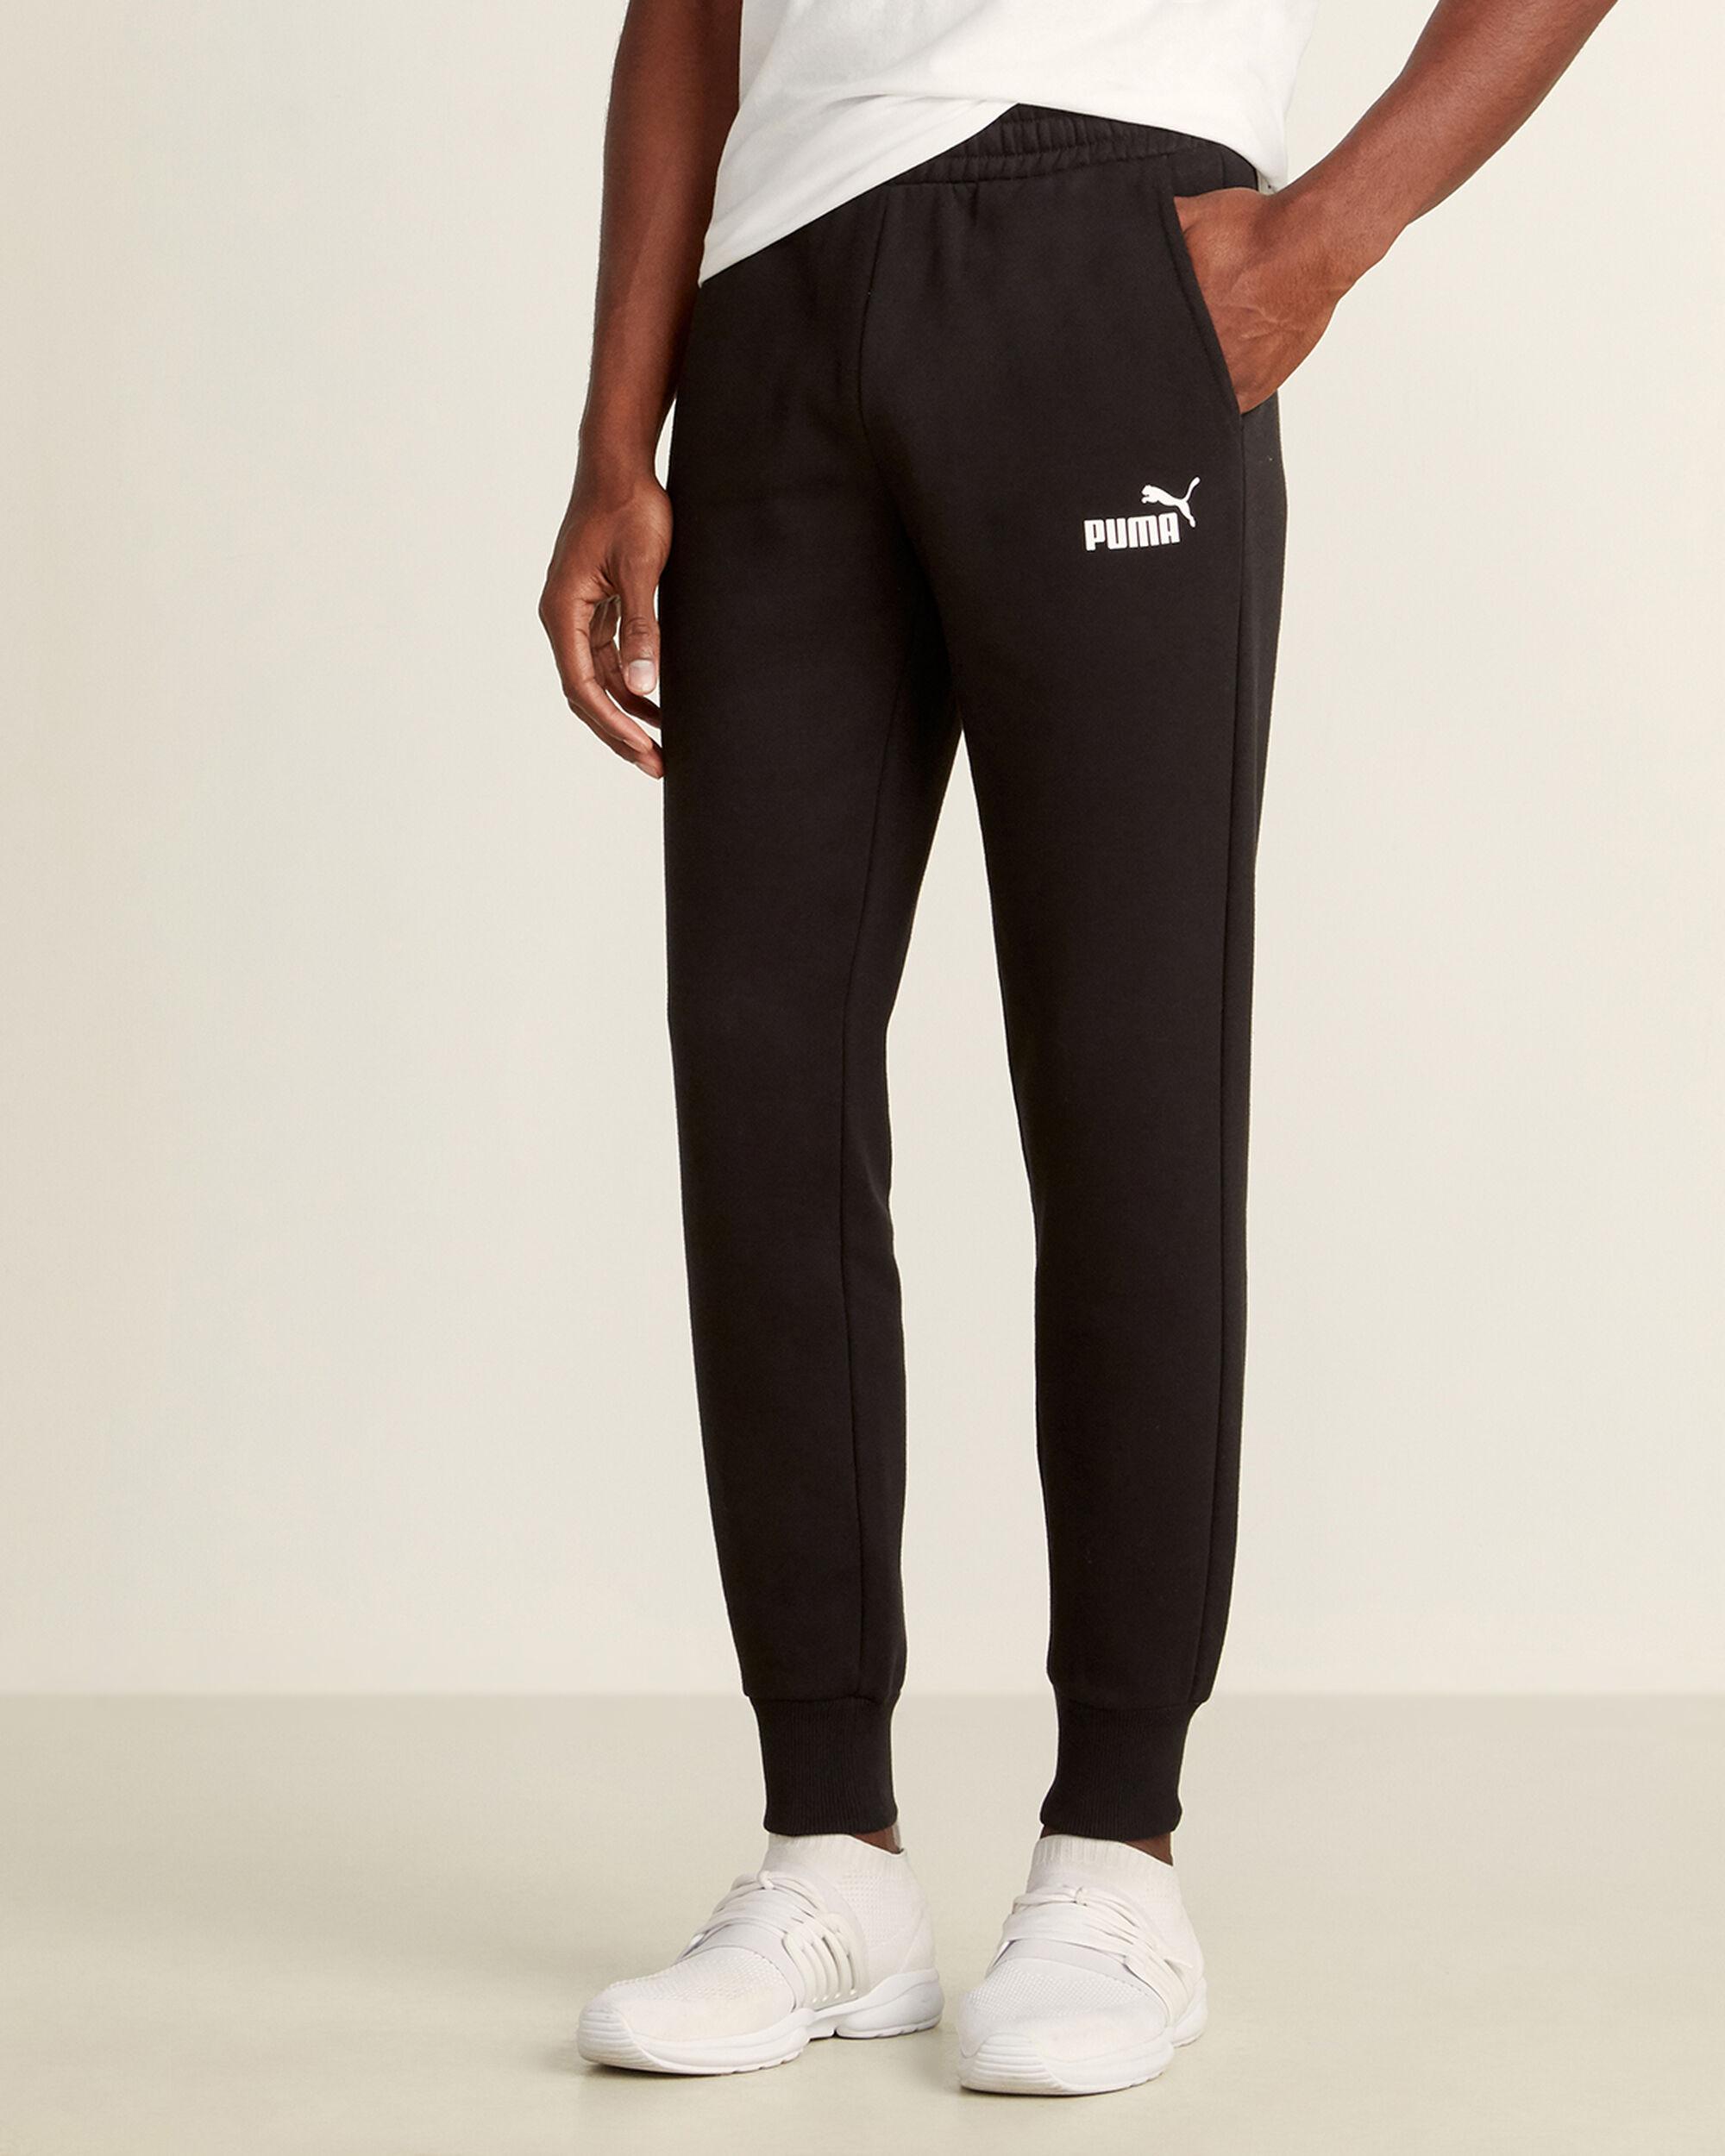 PUMA Essential Logo Fleece Joggers in Black for Men - Lyst